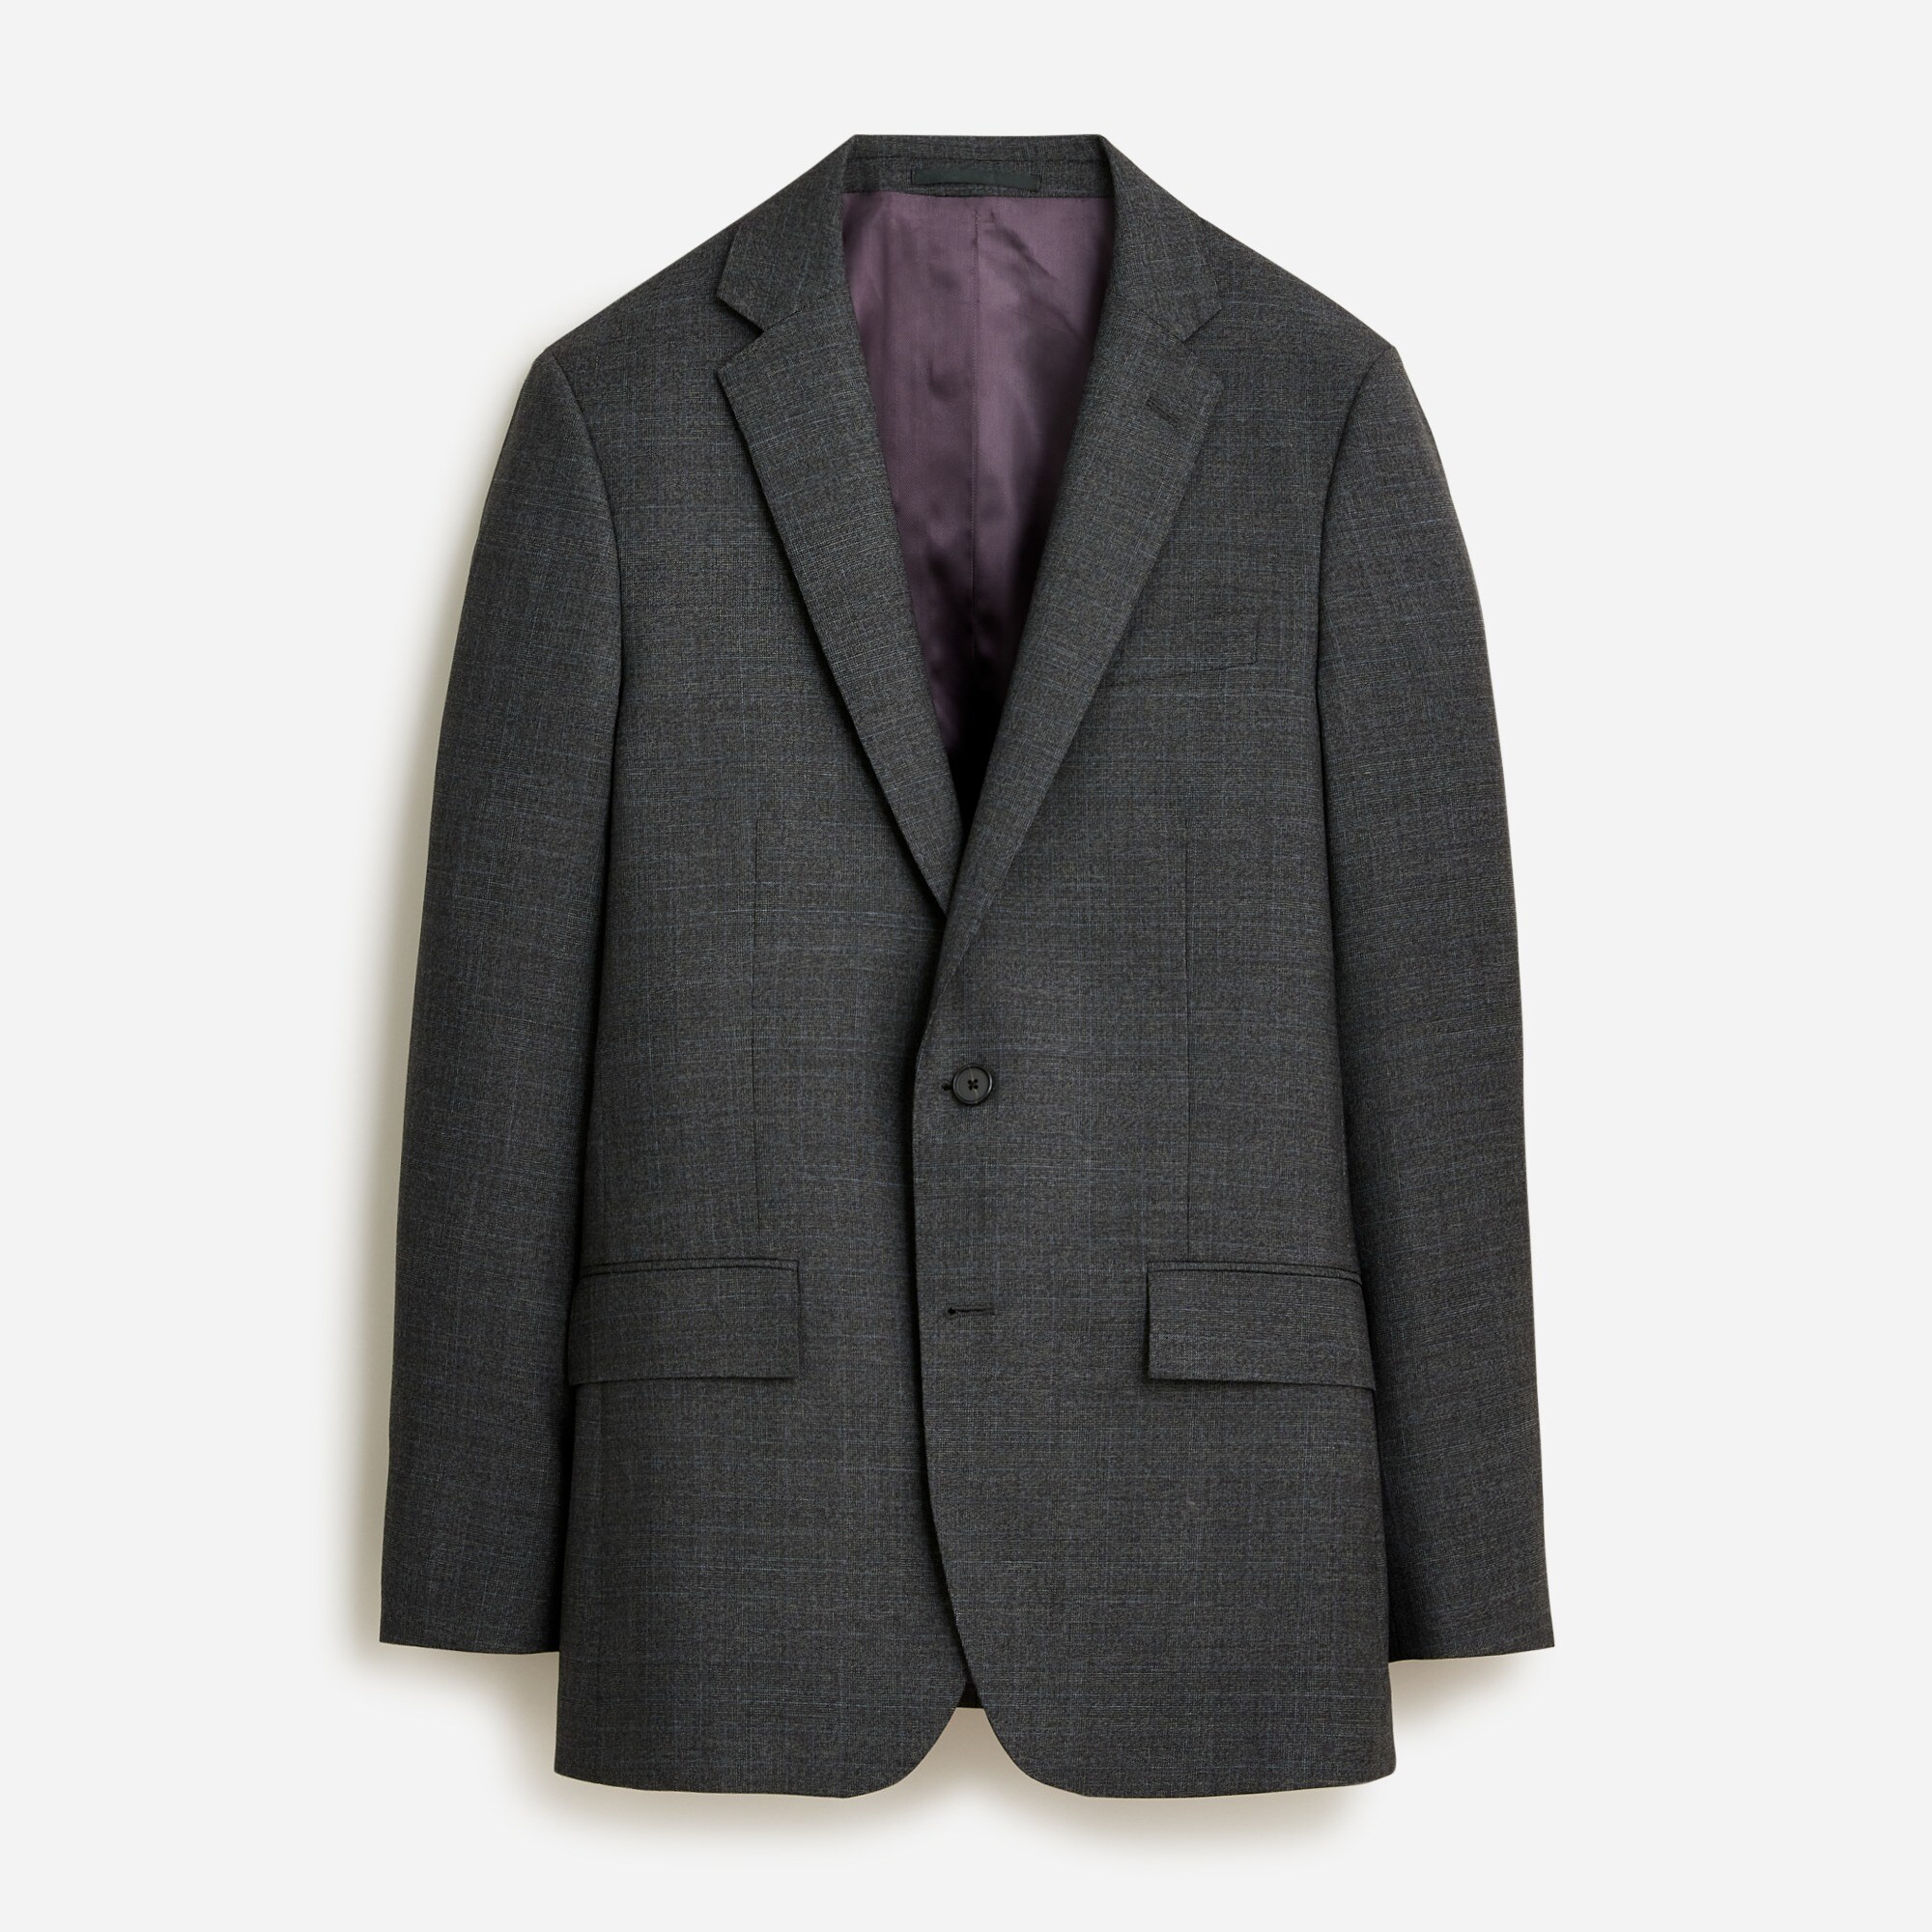  Ludlow Slim-fit suit jacket in Italian wool